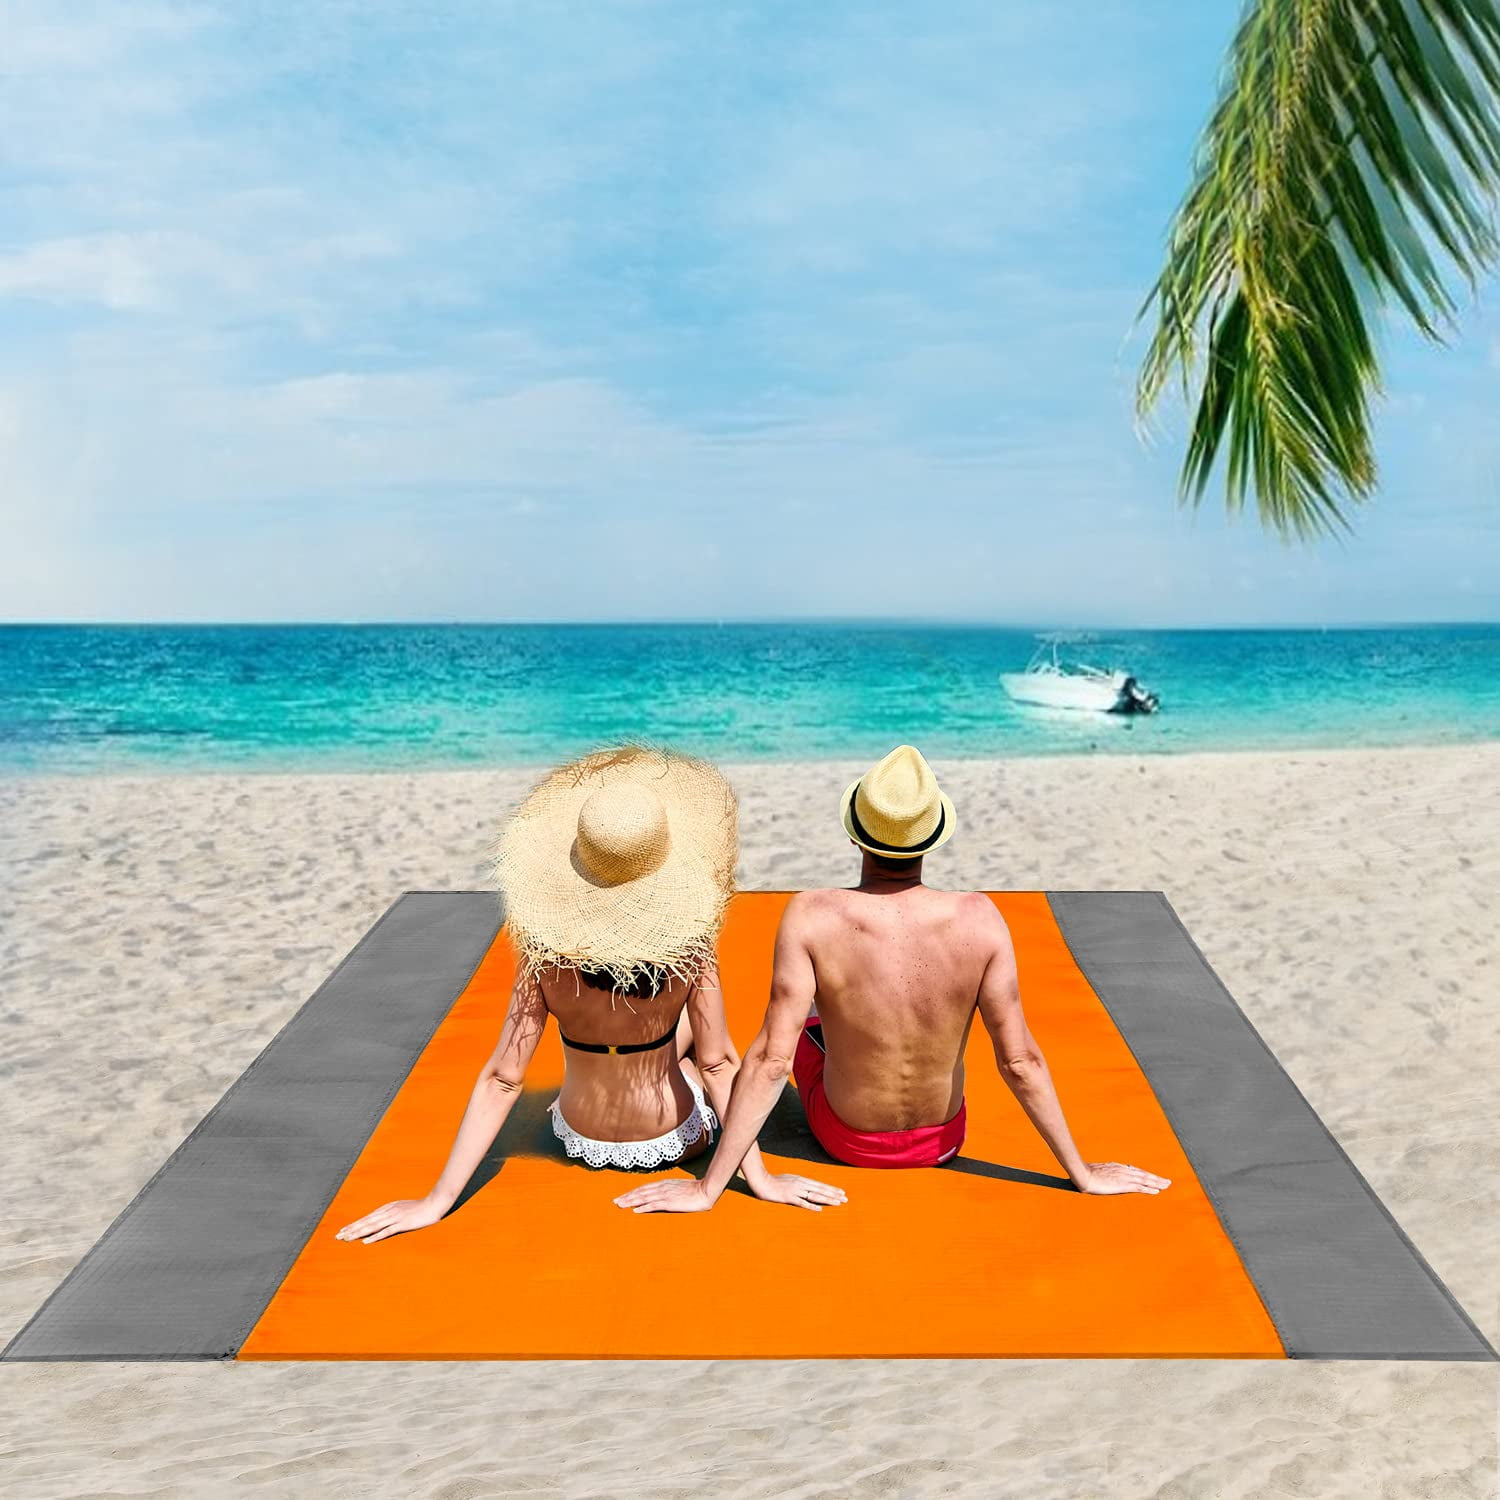 Travel Sand Free Beach & Picnic Blanket Mat Waterproof Camping Garden Outdoor 